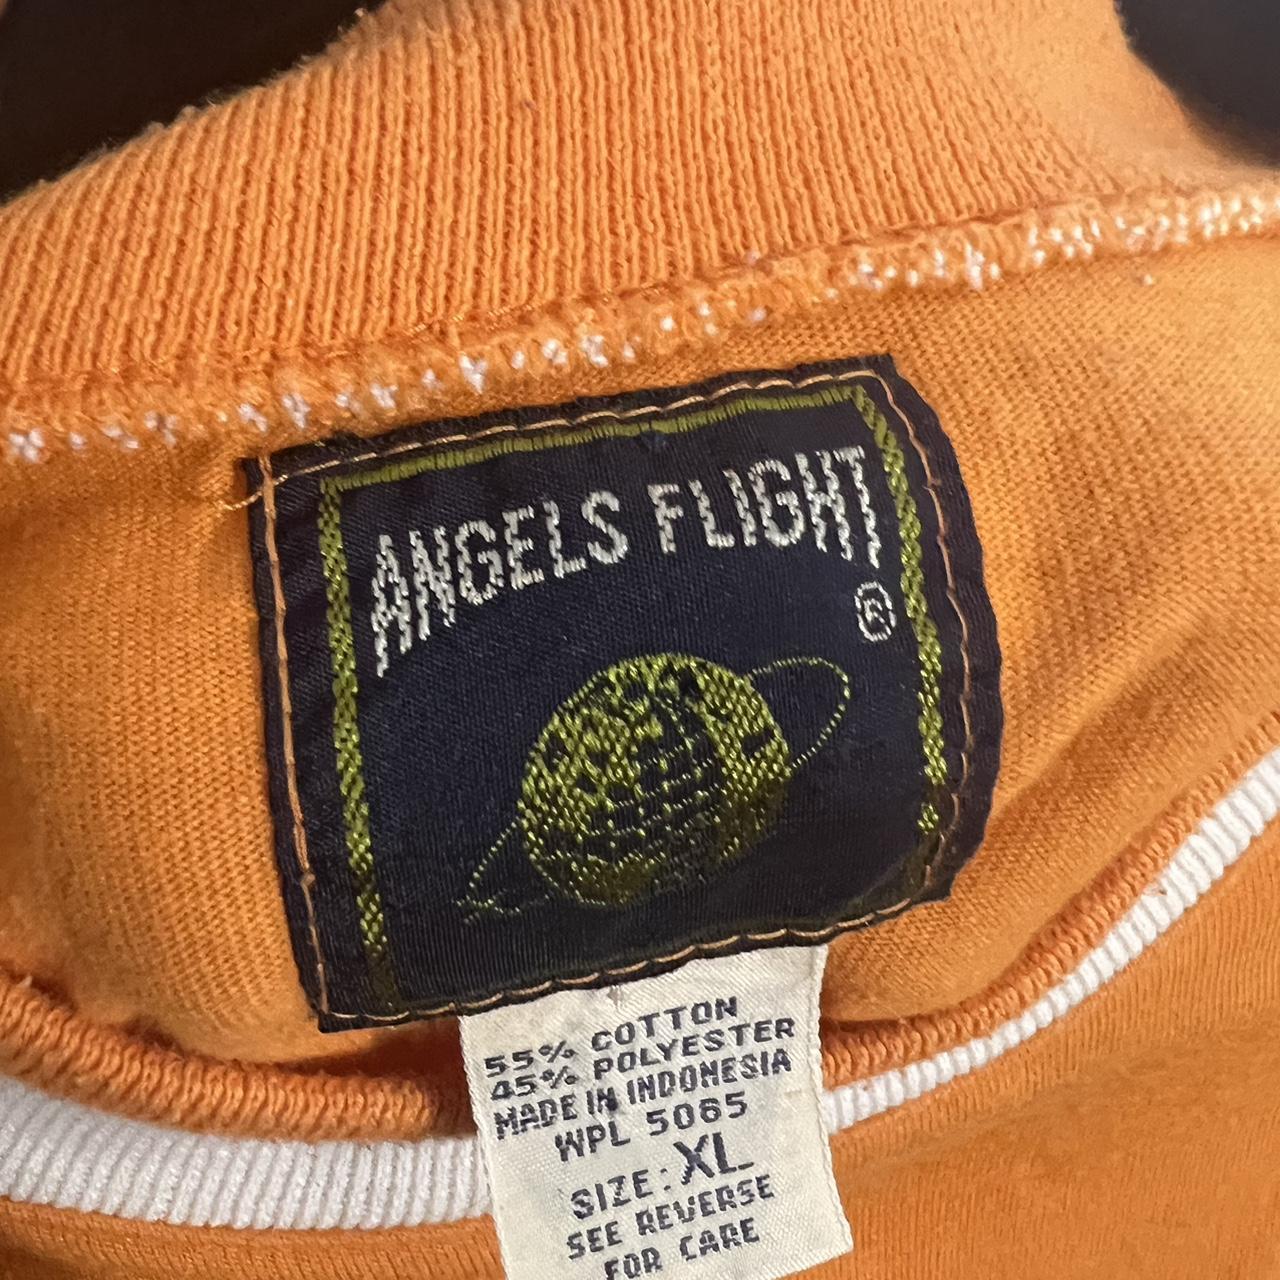 Vintage Nike baseball jersey in orange. From 1999. - Depop